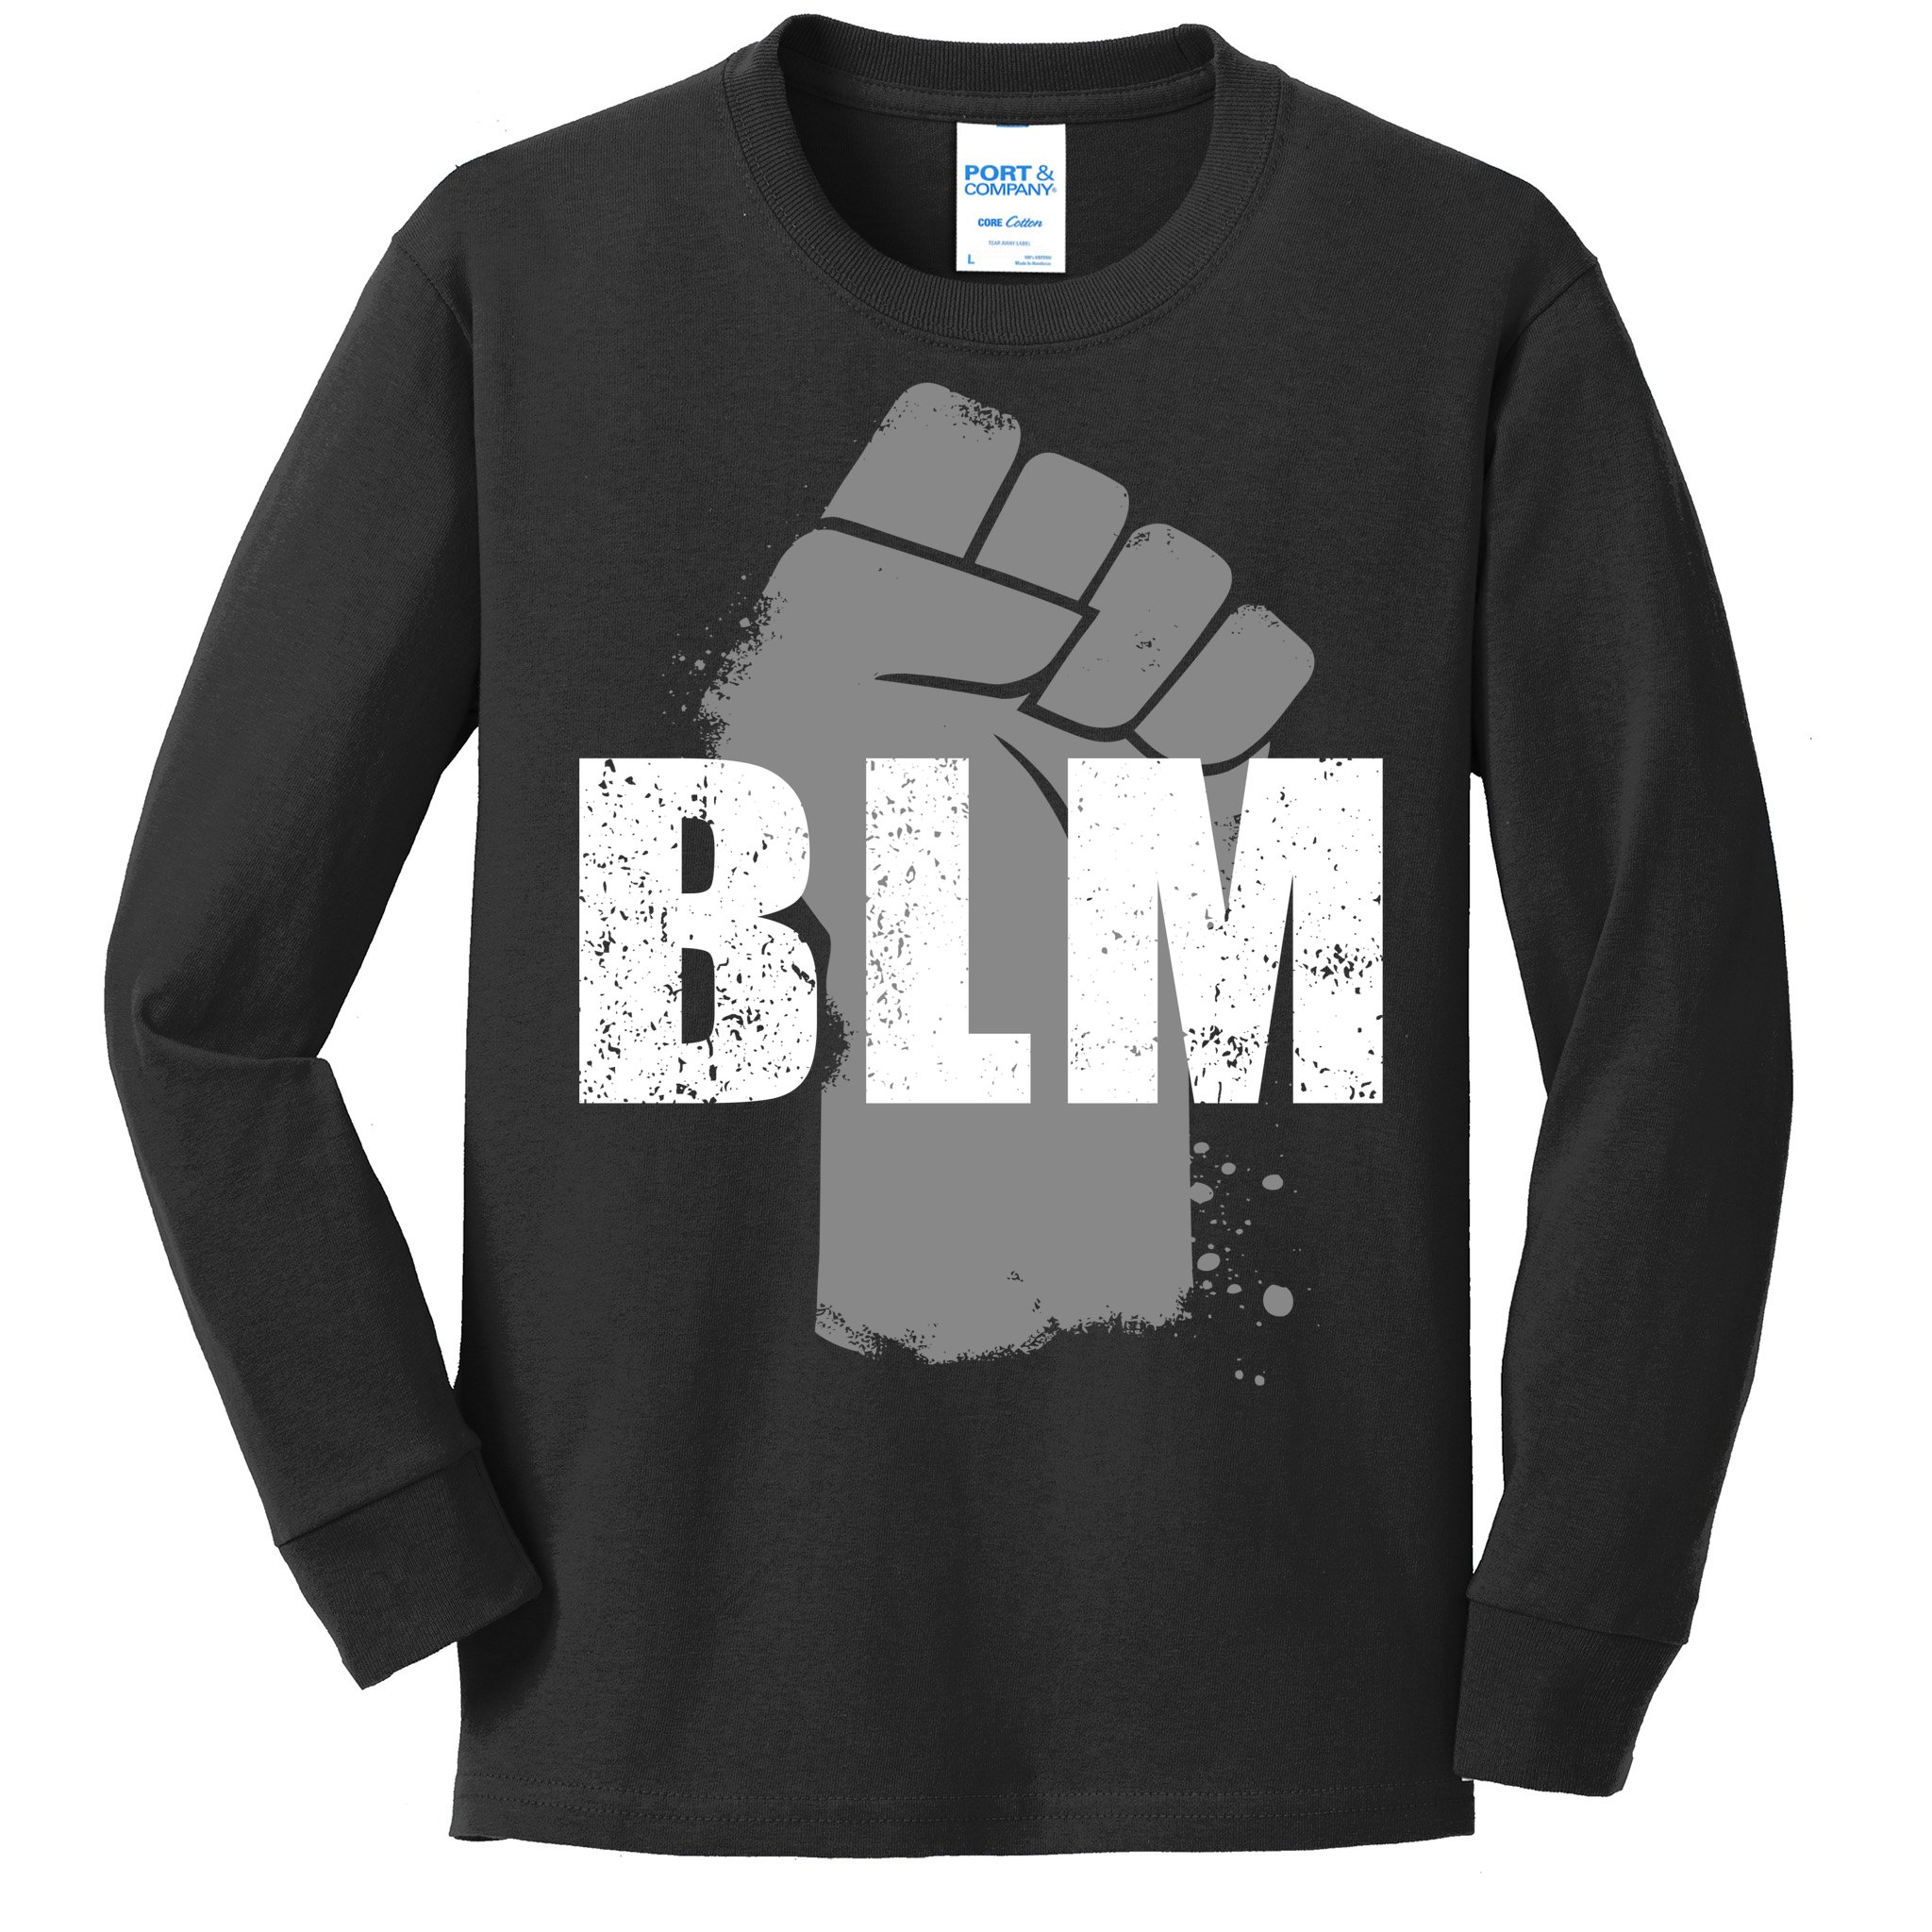  Black Lives Matter Long Sleeve BLM TShirt : Clothing